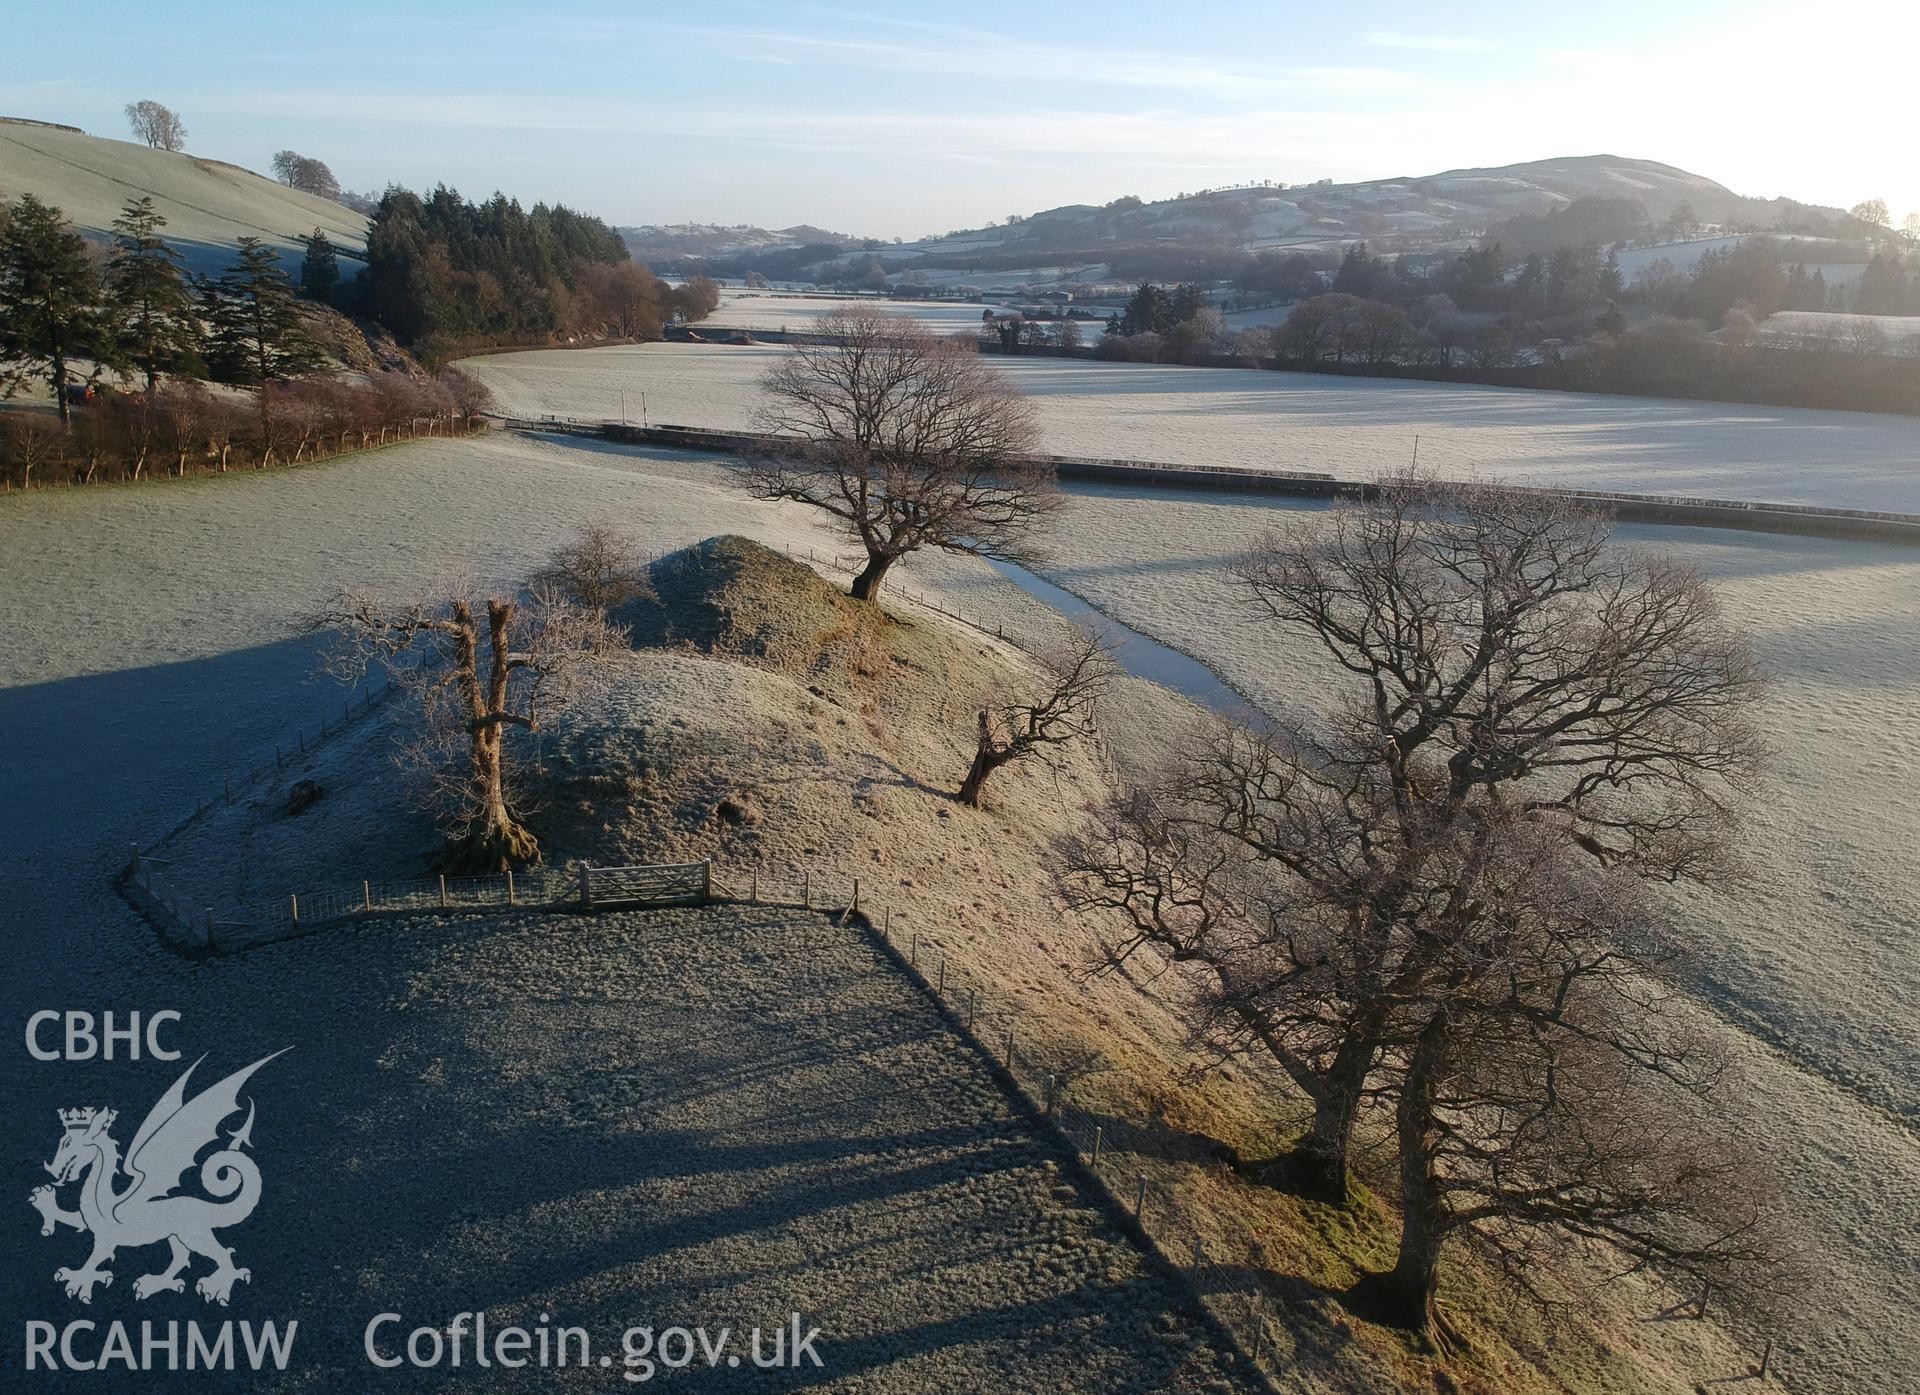 View of Llysun motte and bailey castle, Llanerfyl. Colour photograph taken by Paul R. Davis on 2nd January 2019.